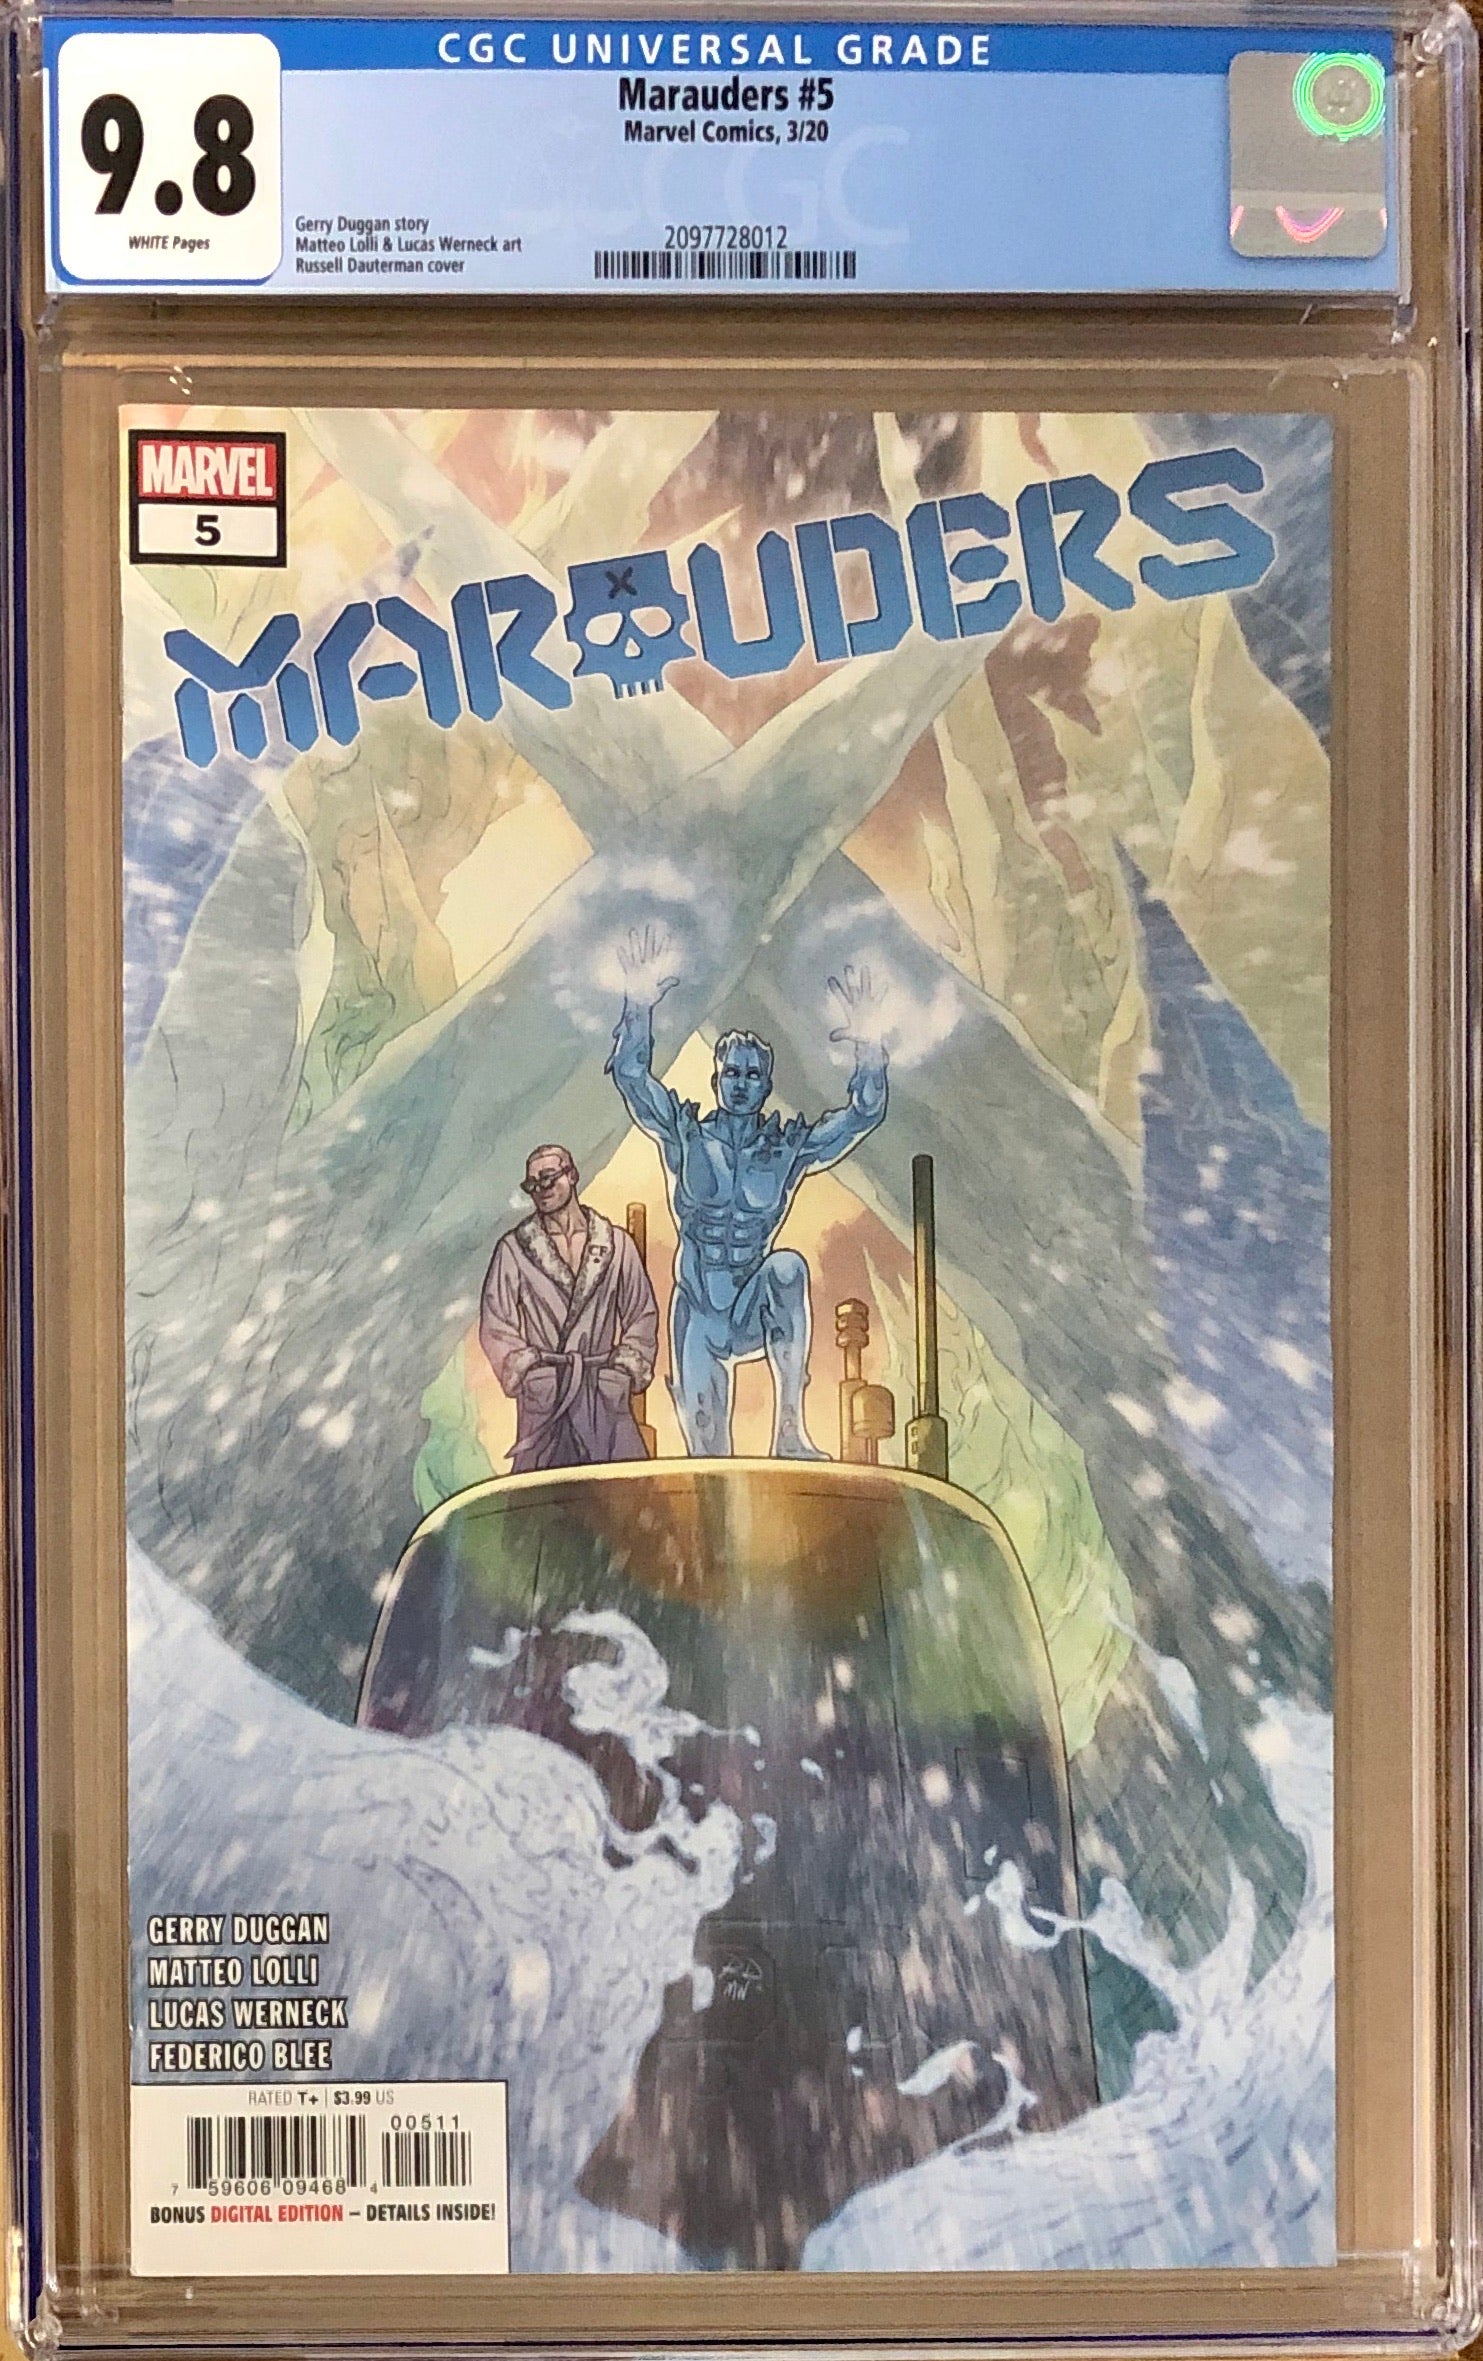 Marauders #5 CGC 9.8 - Dawn of X!